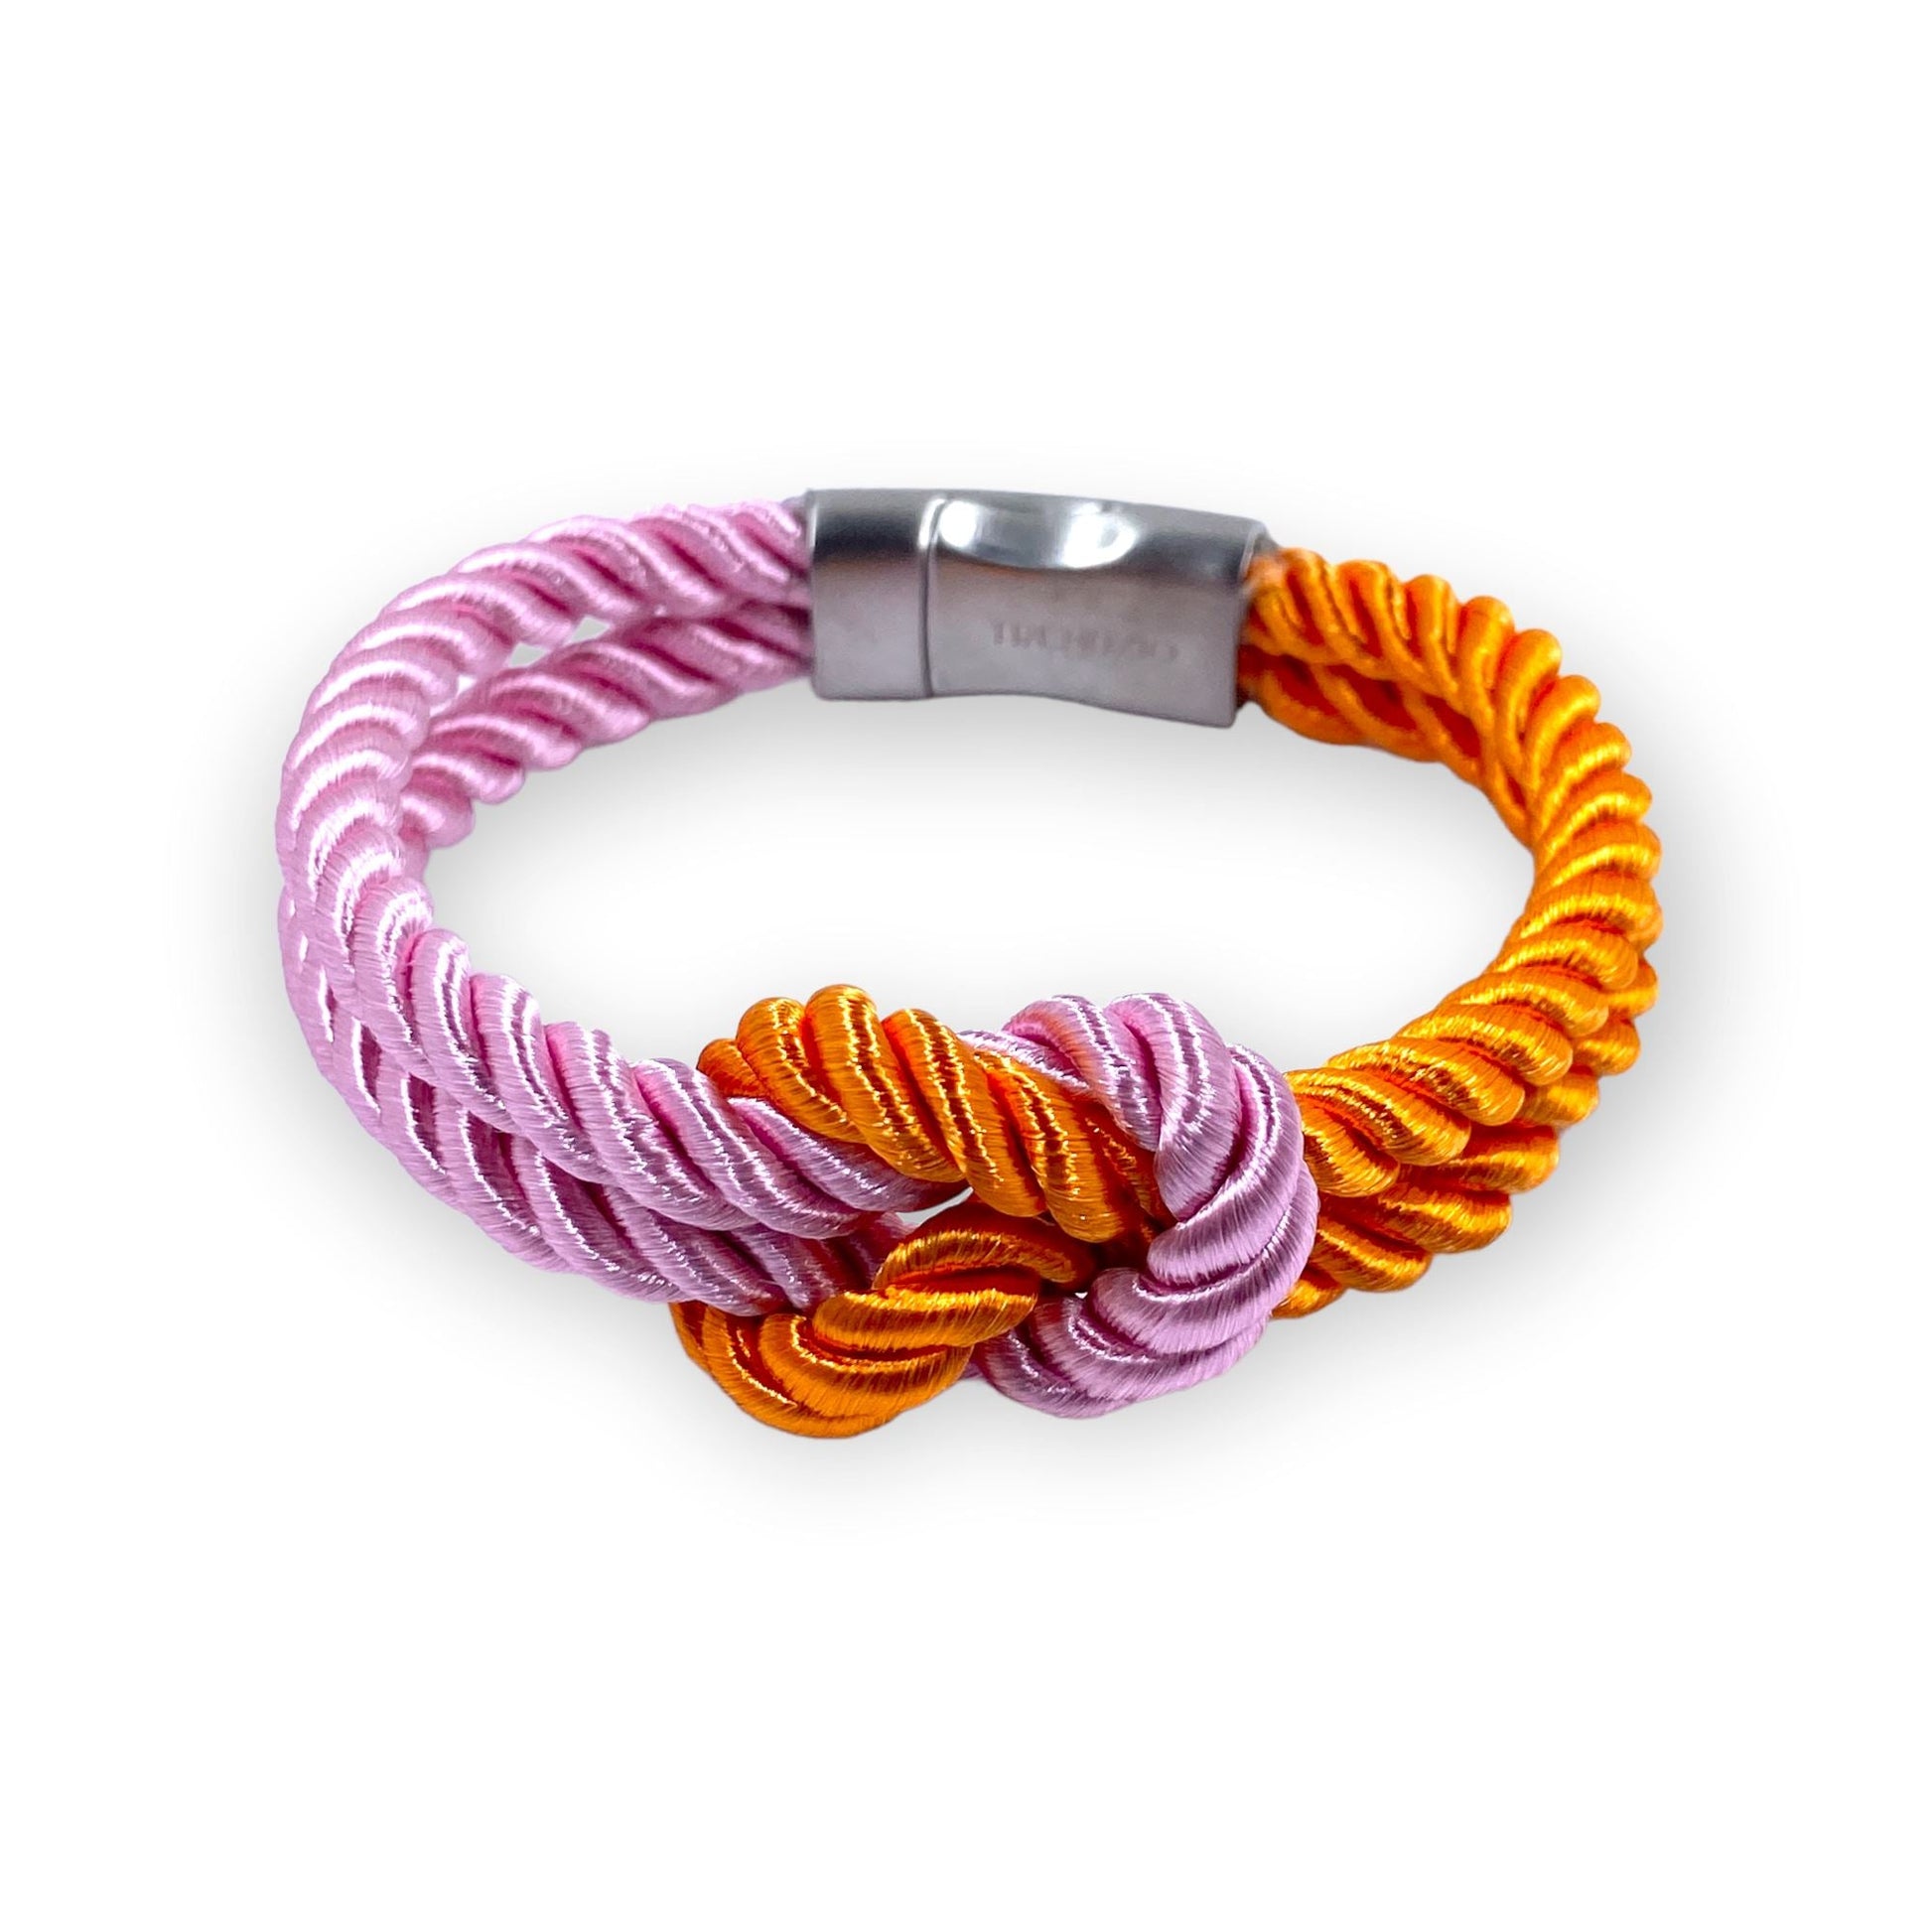 The Original Love Knot Satin Rope Bracelet Pink and Orange Bracelets Trendzio Pink and Orange 